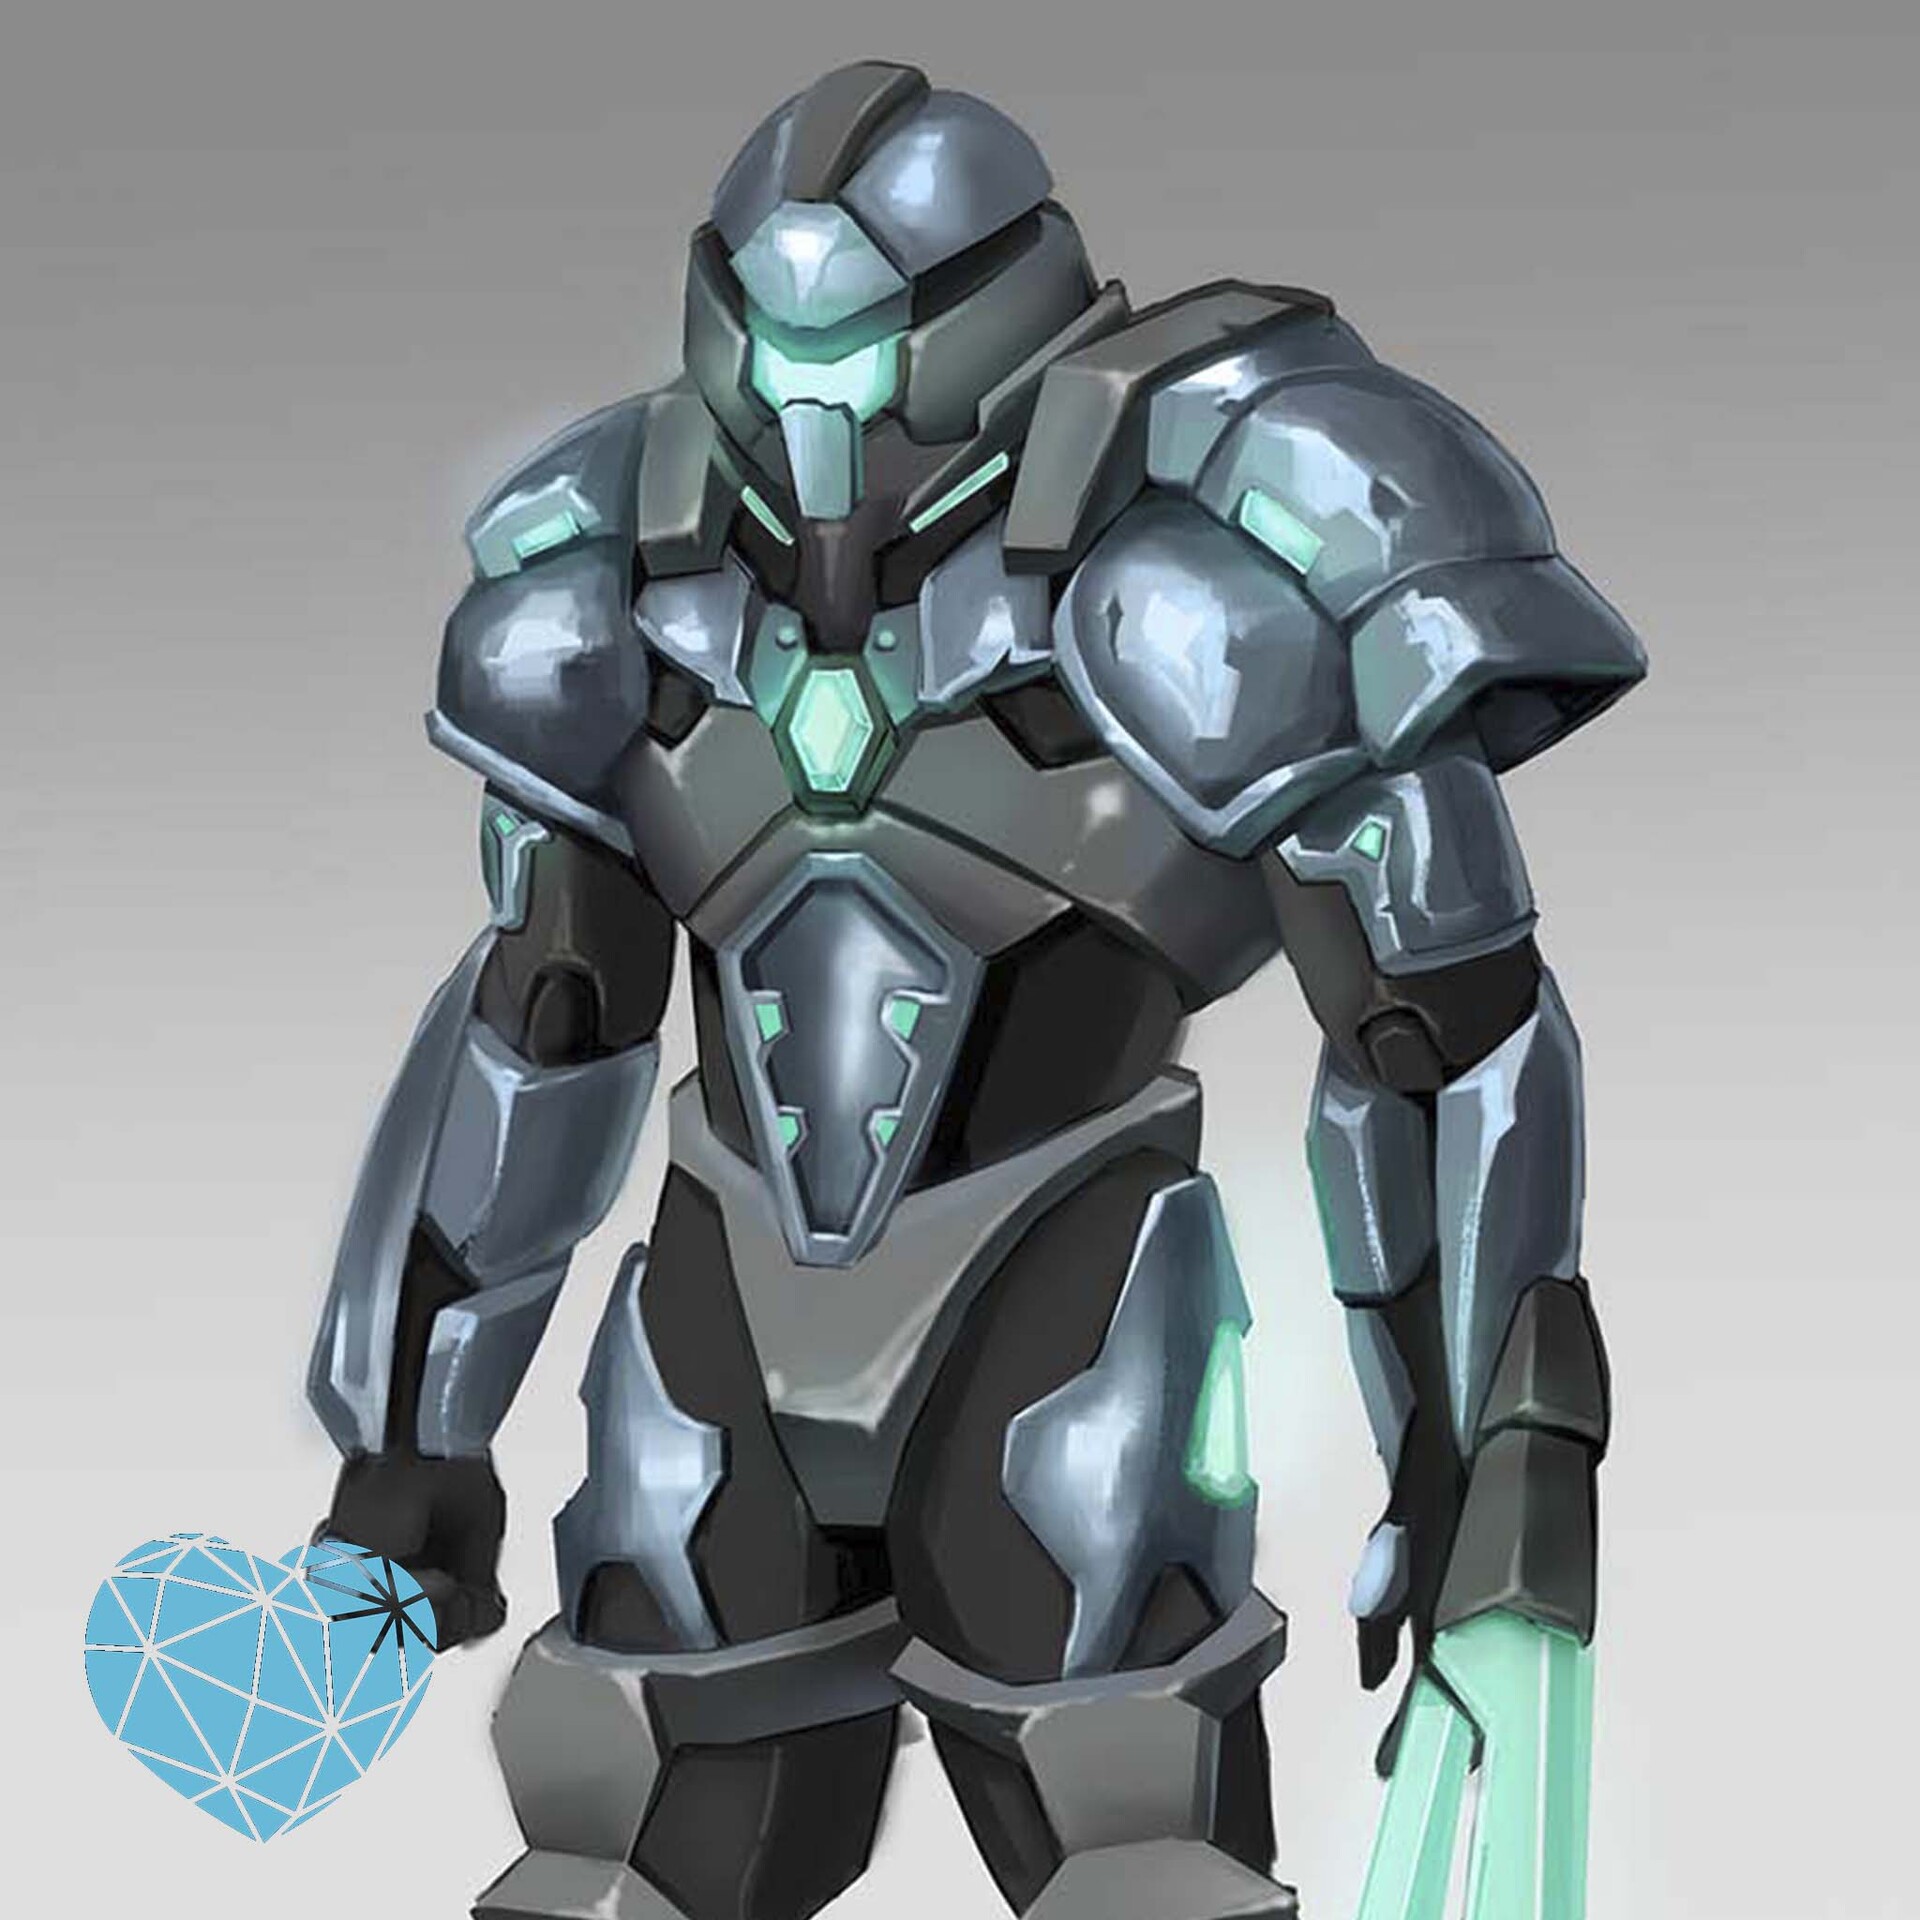 ArtStation - Scifi Armor Concept